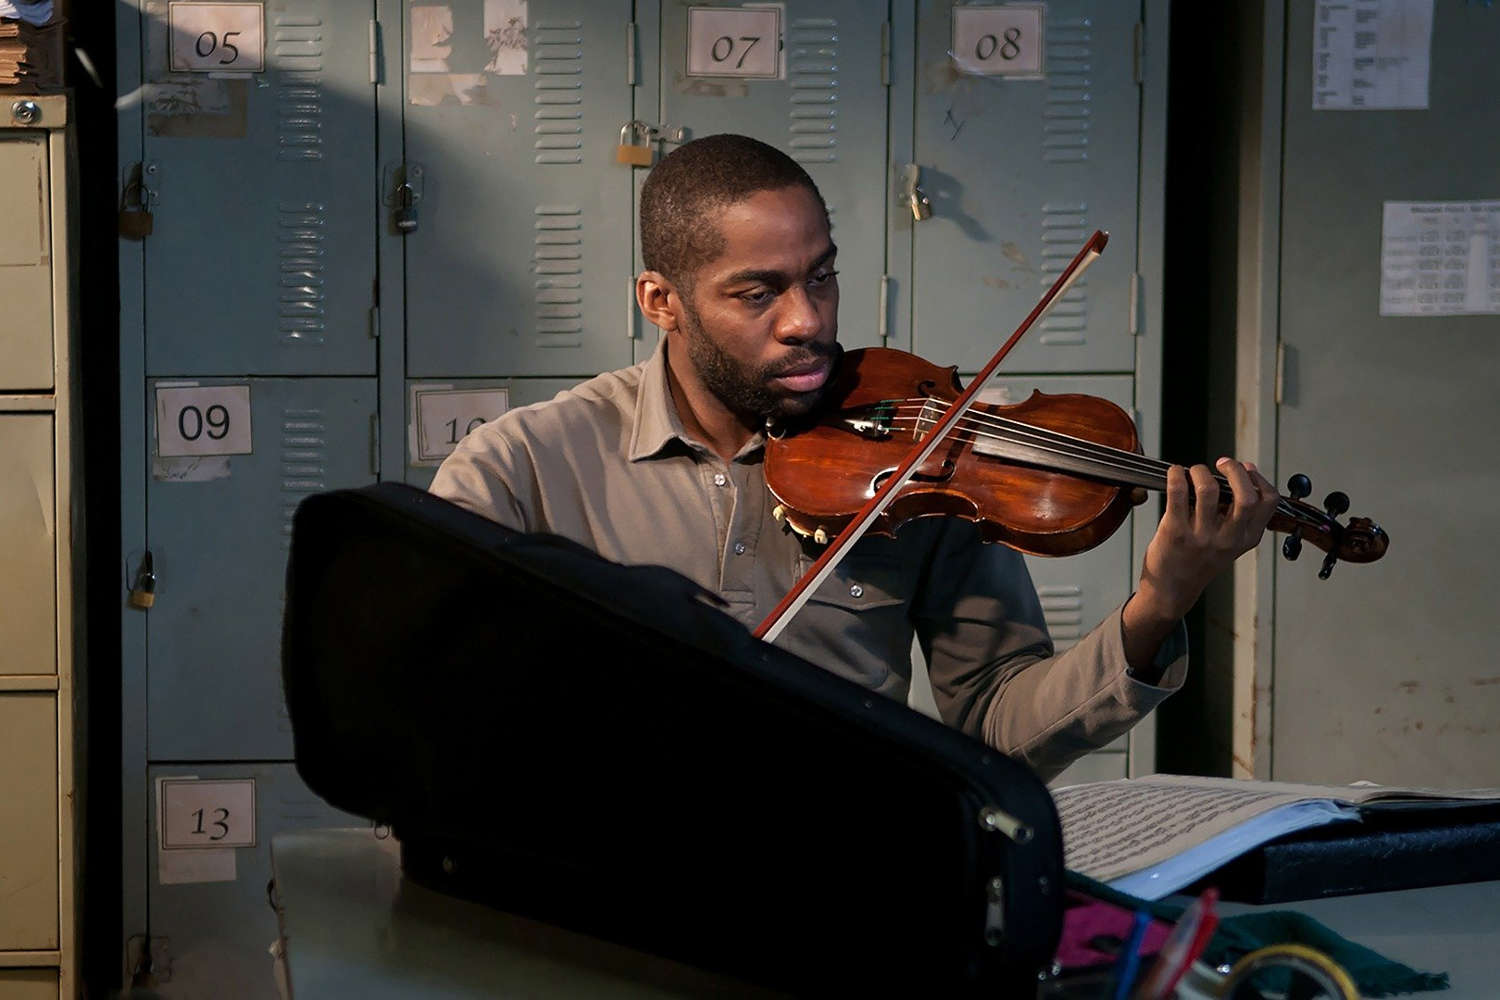 The Violin Teacher (2015)